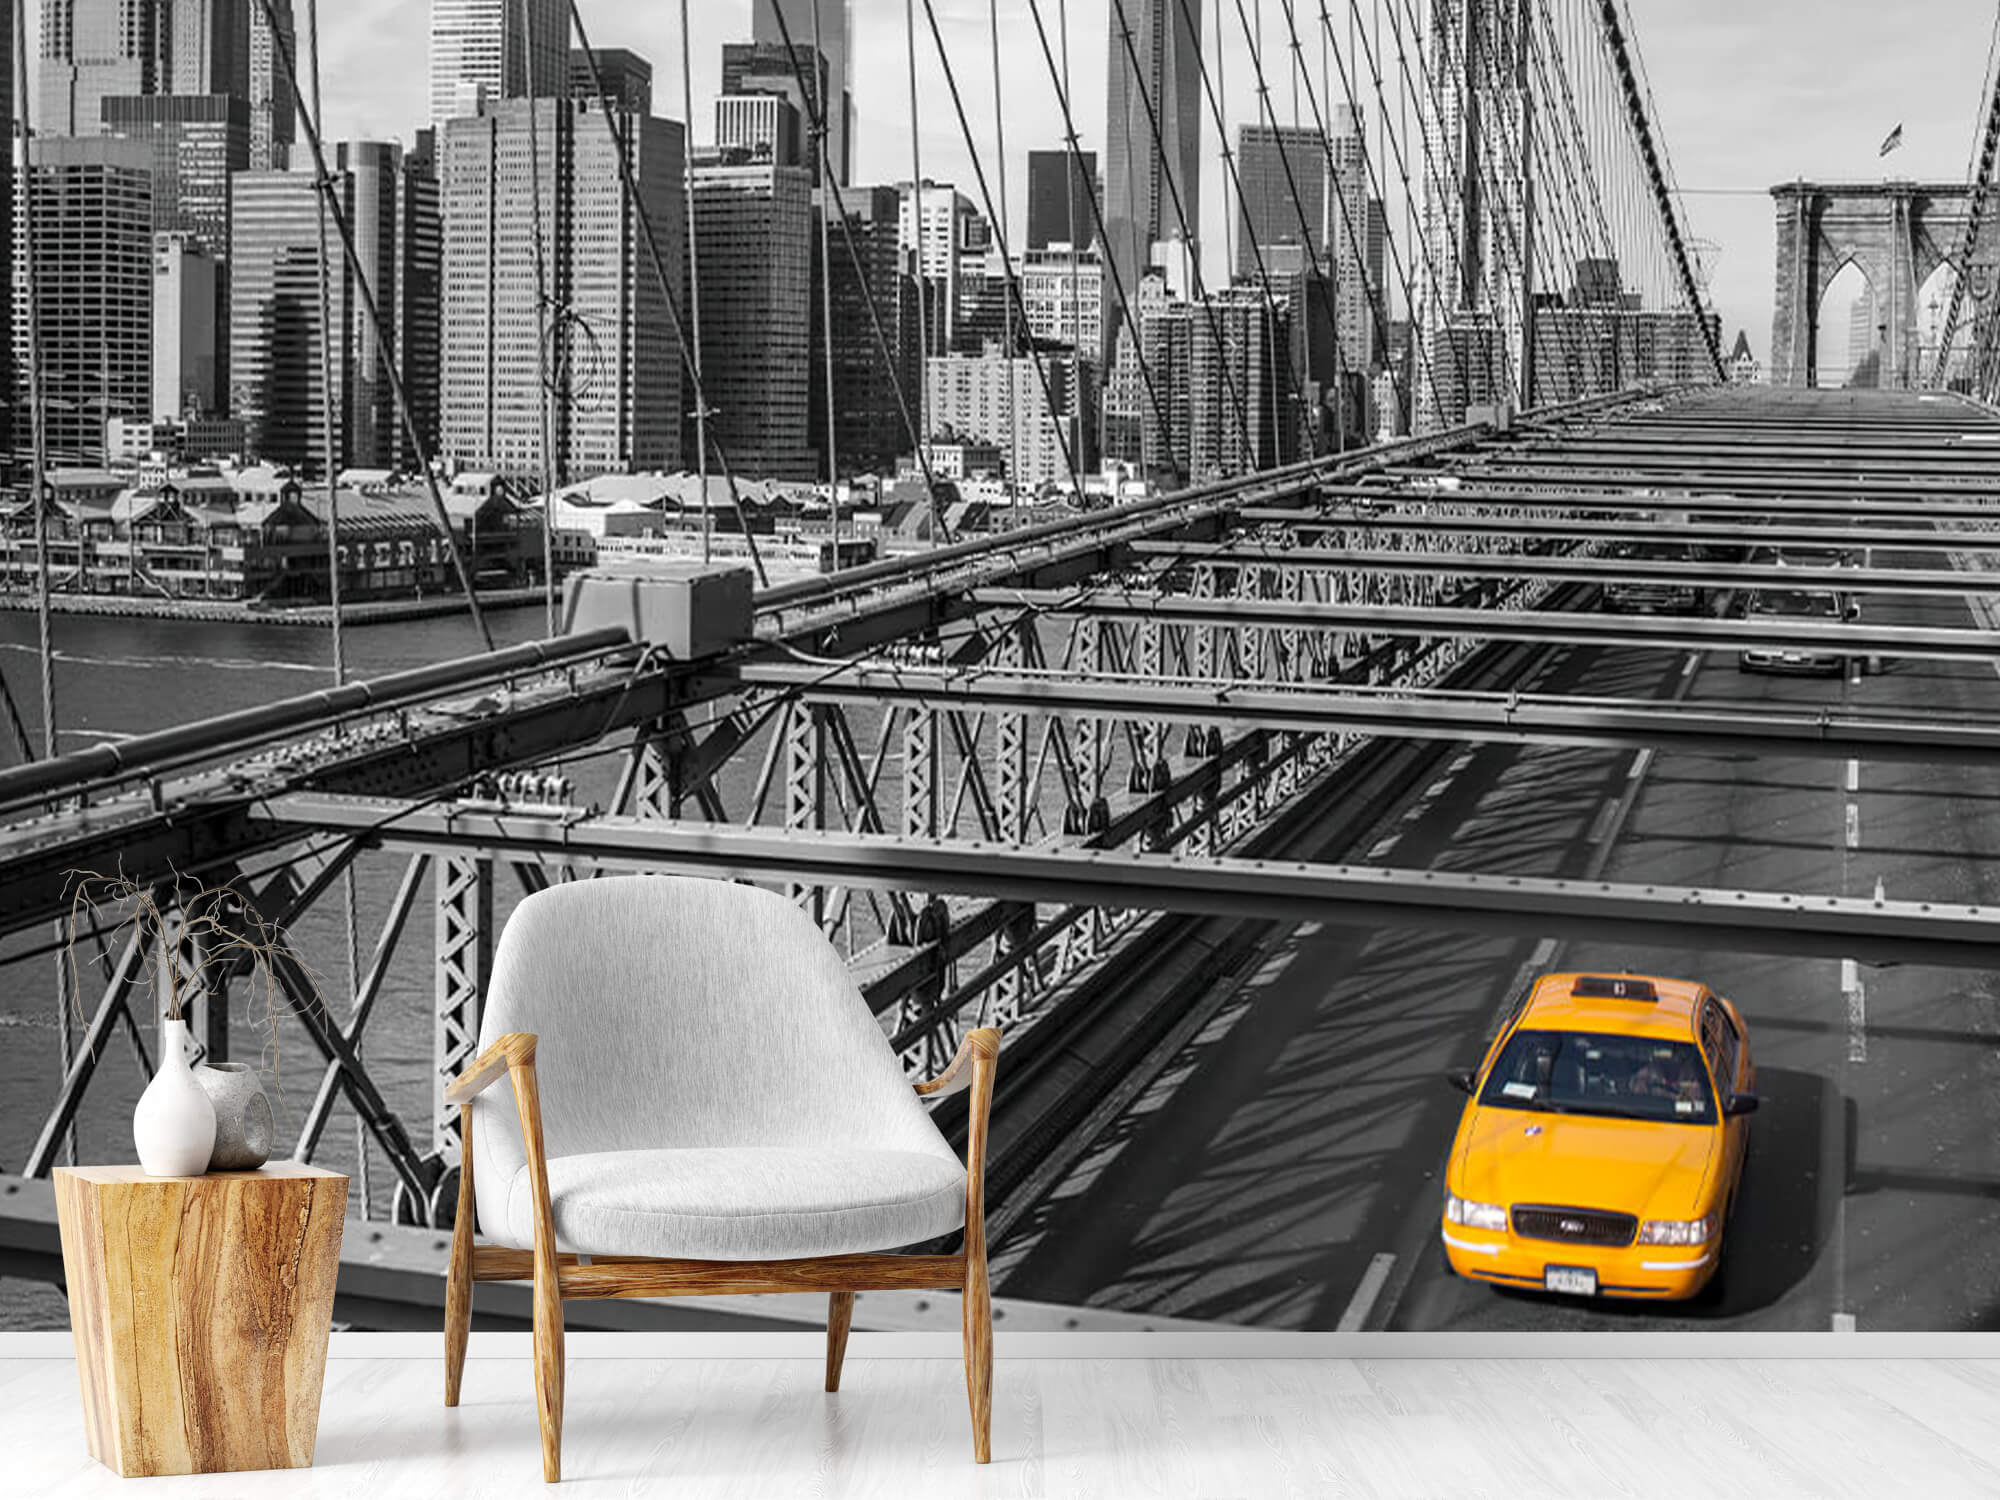  Un taxi sur le pont de Brooklyn 2